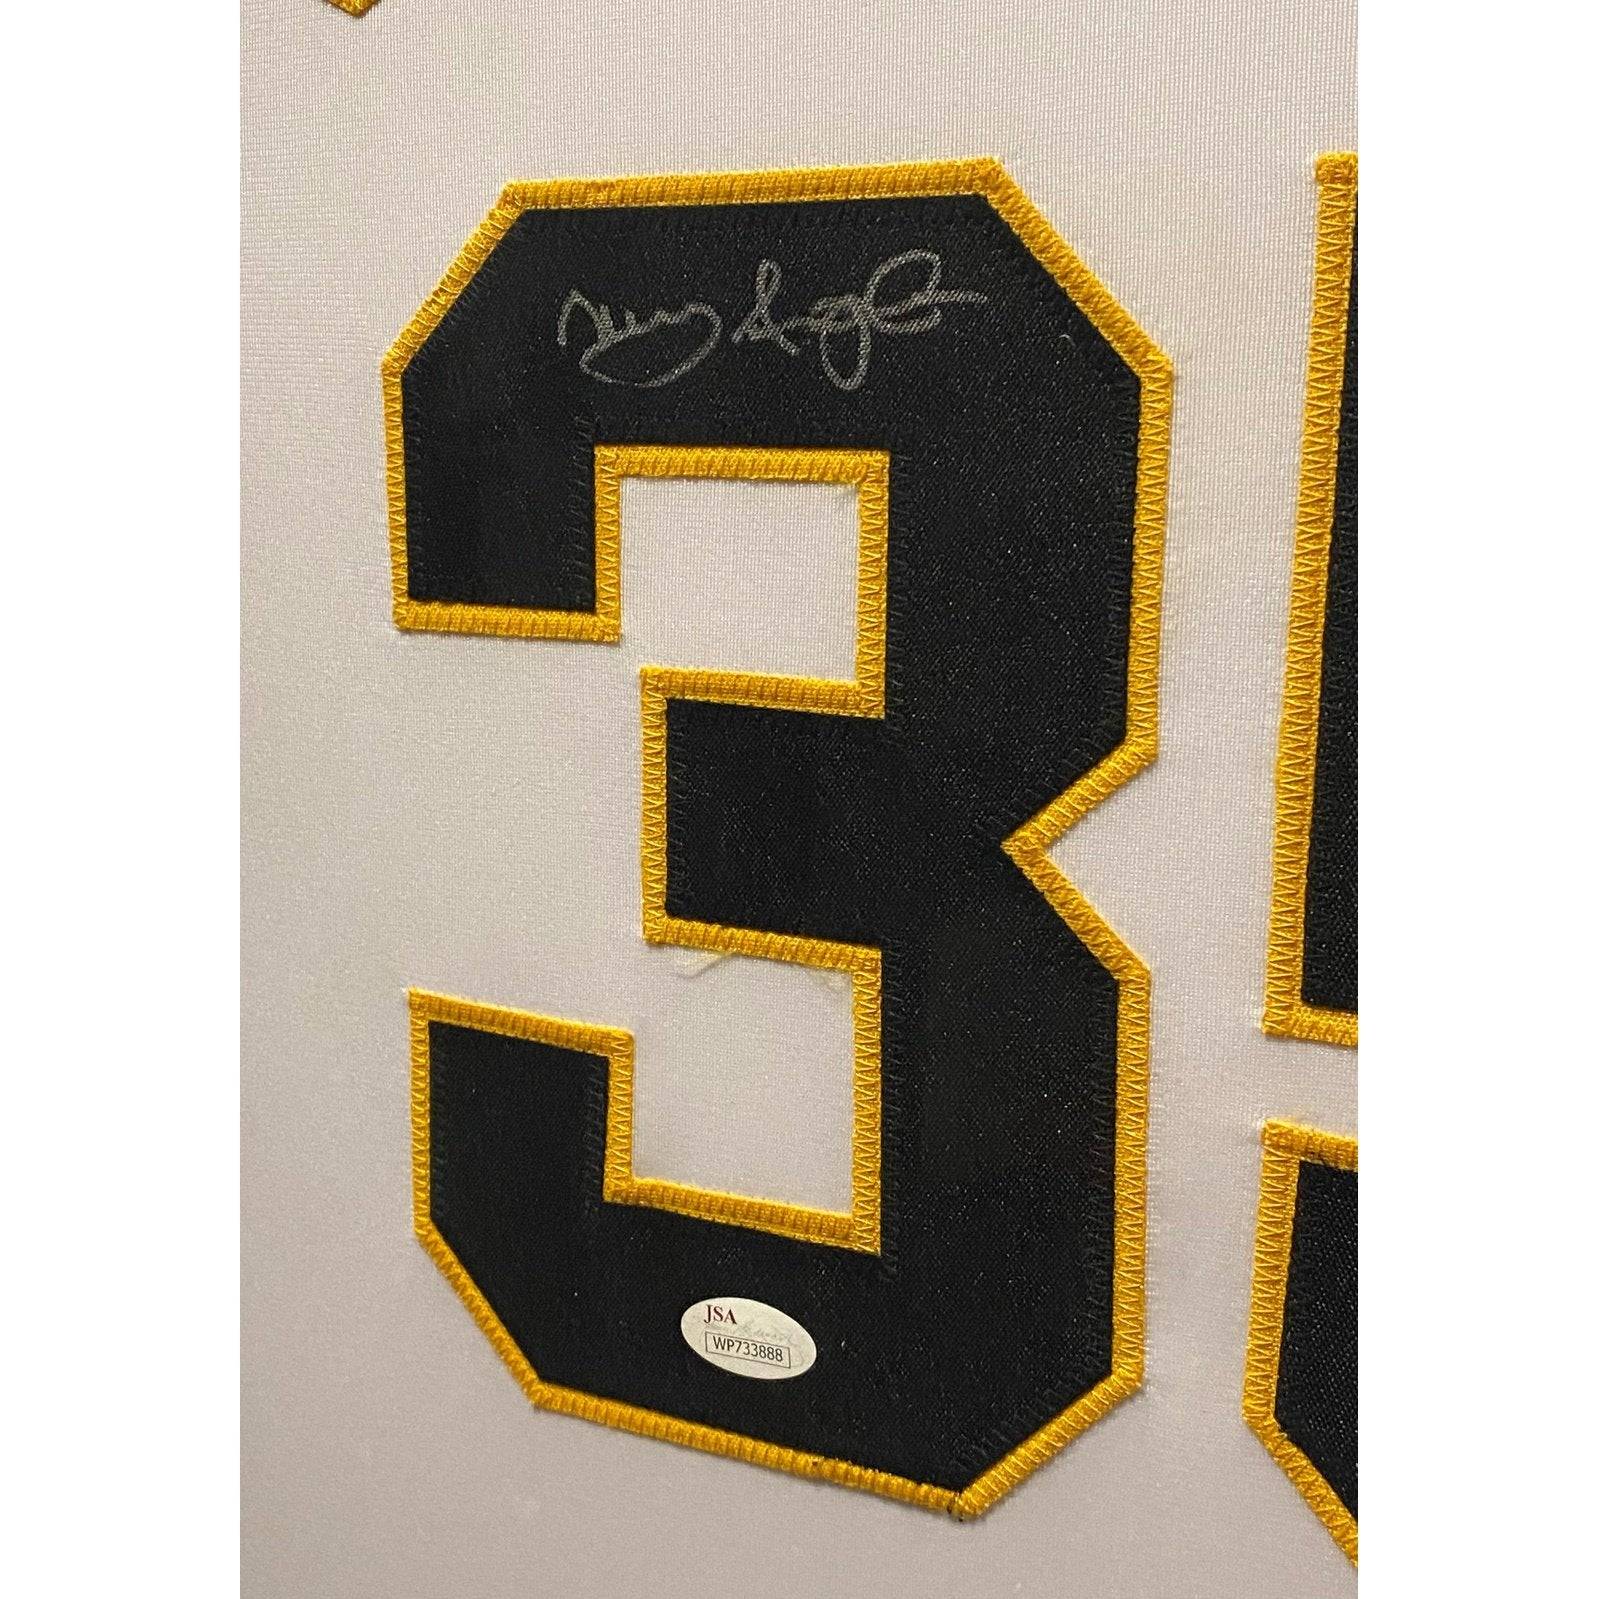 Manny Sanguillen Framed Jersey JSA Autographed Signed Pittsburgh Pirates